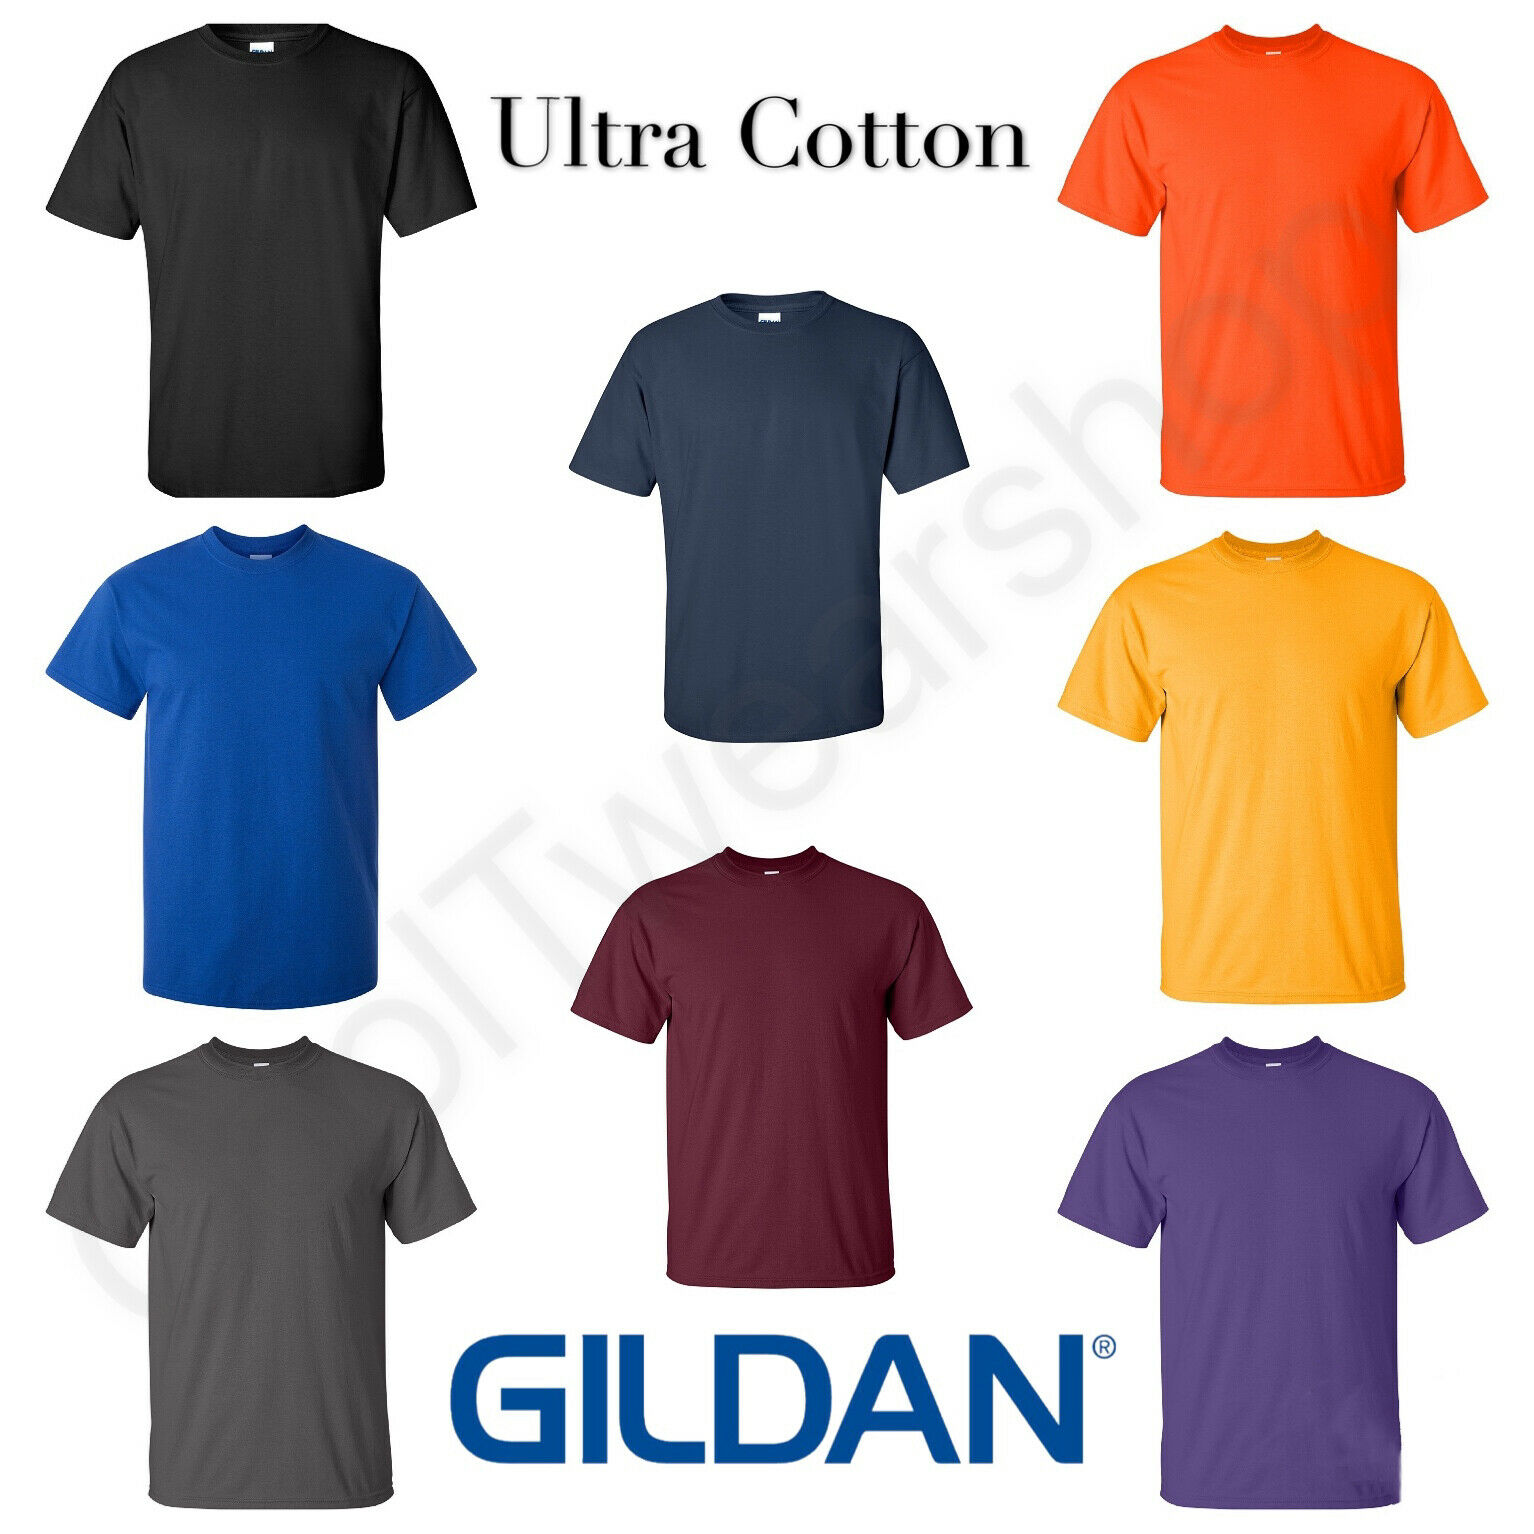 NEW Gildan Men's Ultra Cotton Plain Crew Neck Short Sleeves T-Shirt 2000